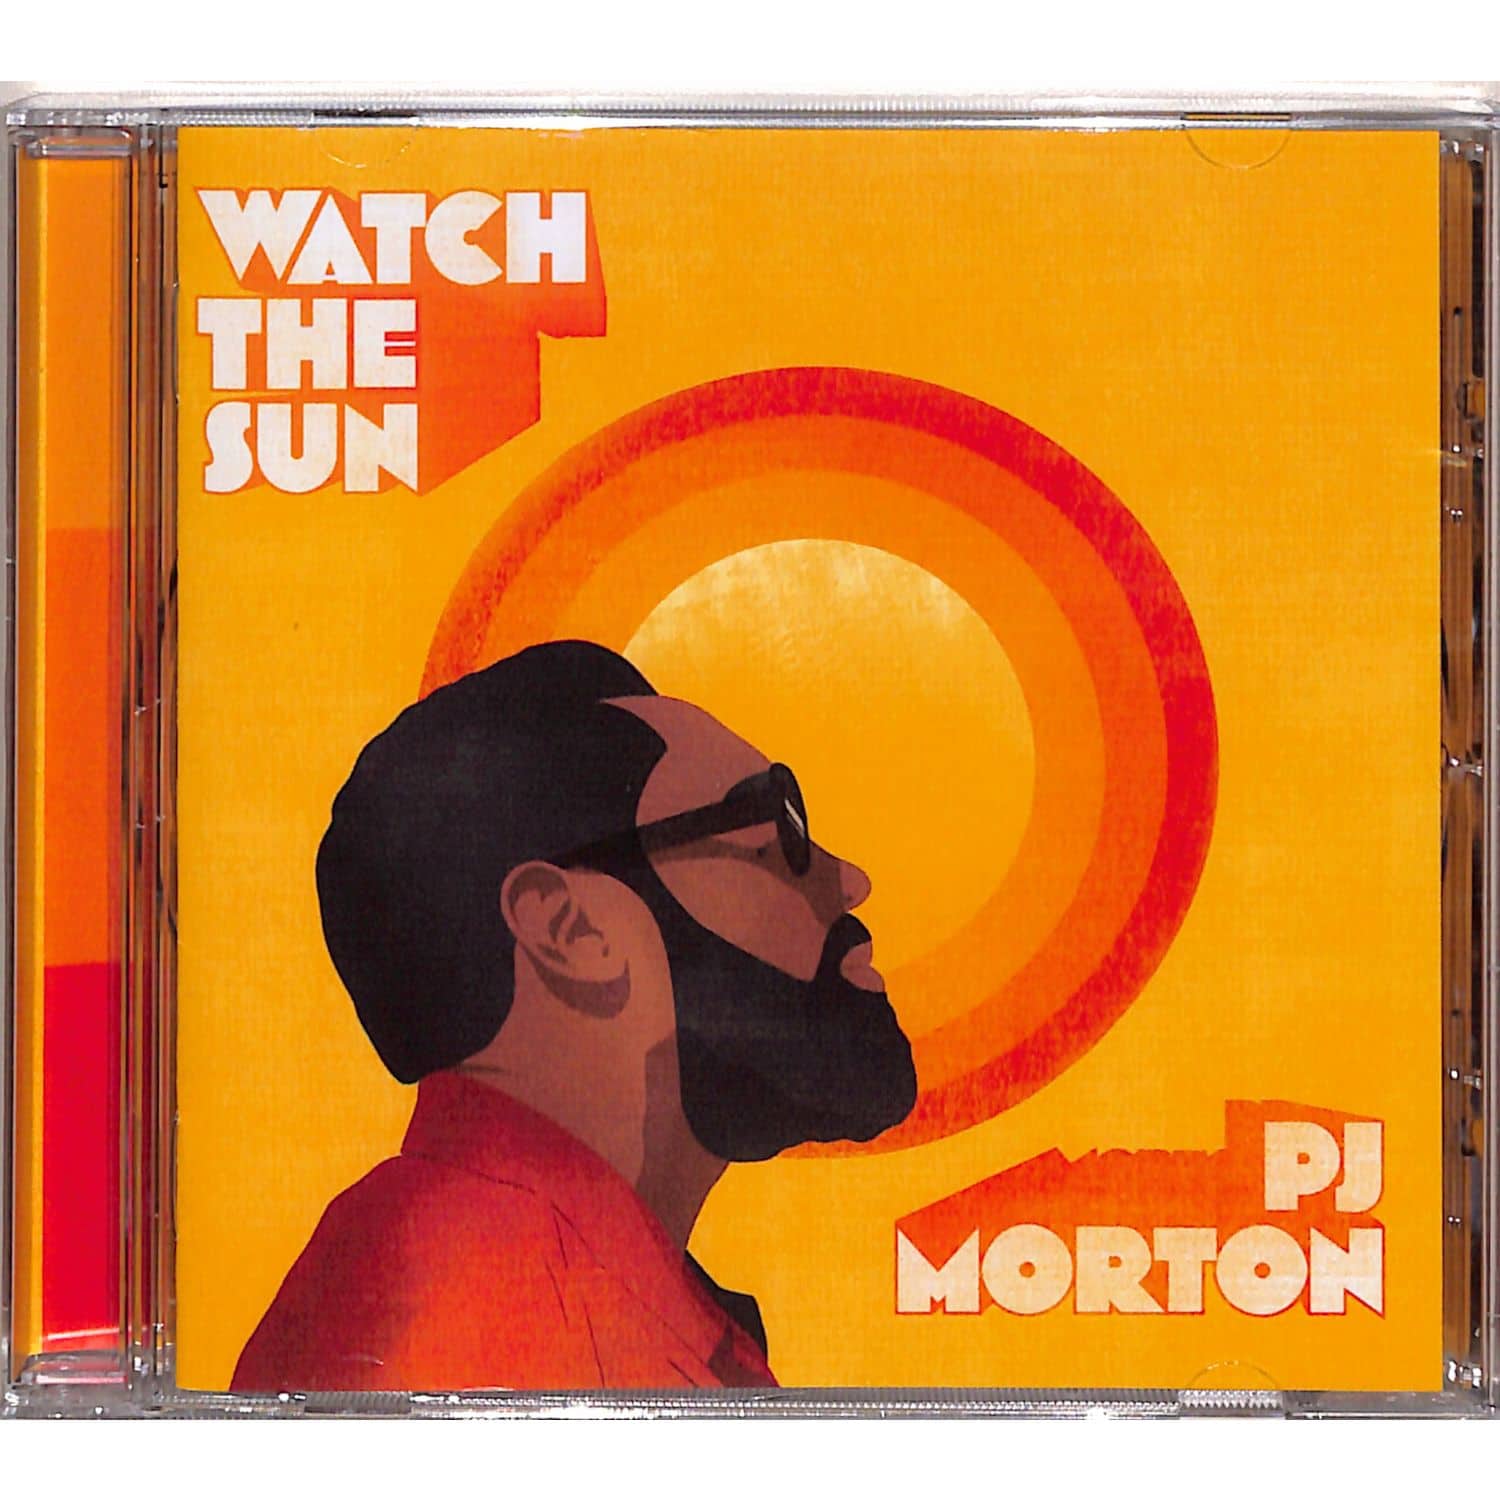 PJ Morton - WATCH THE SUN 